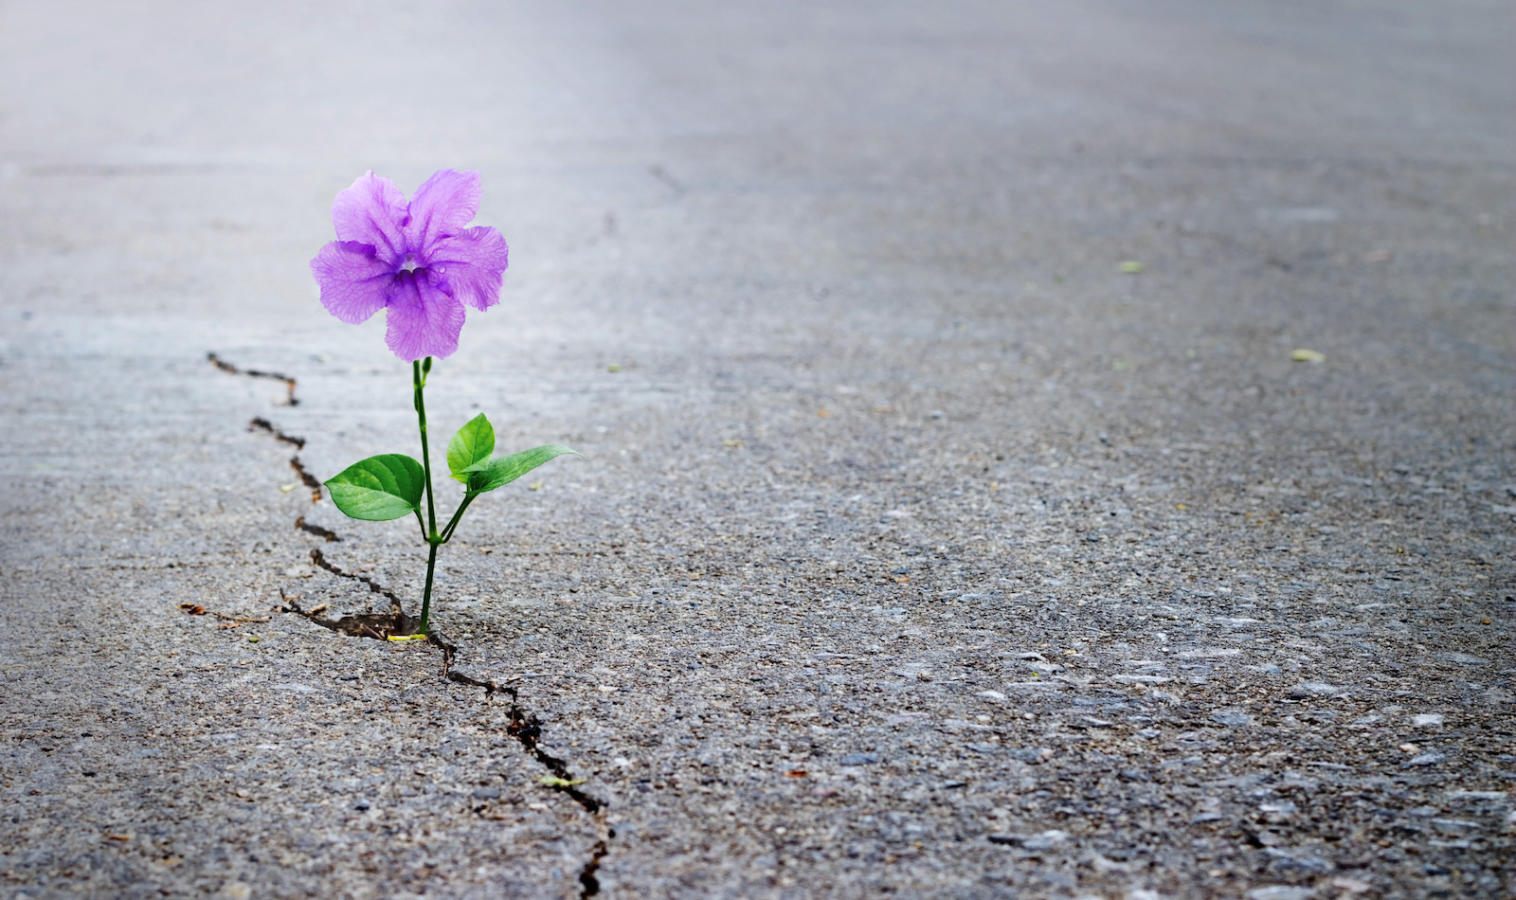 flower growing through pavement cracks